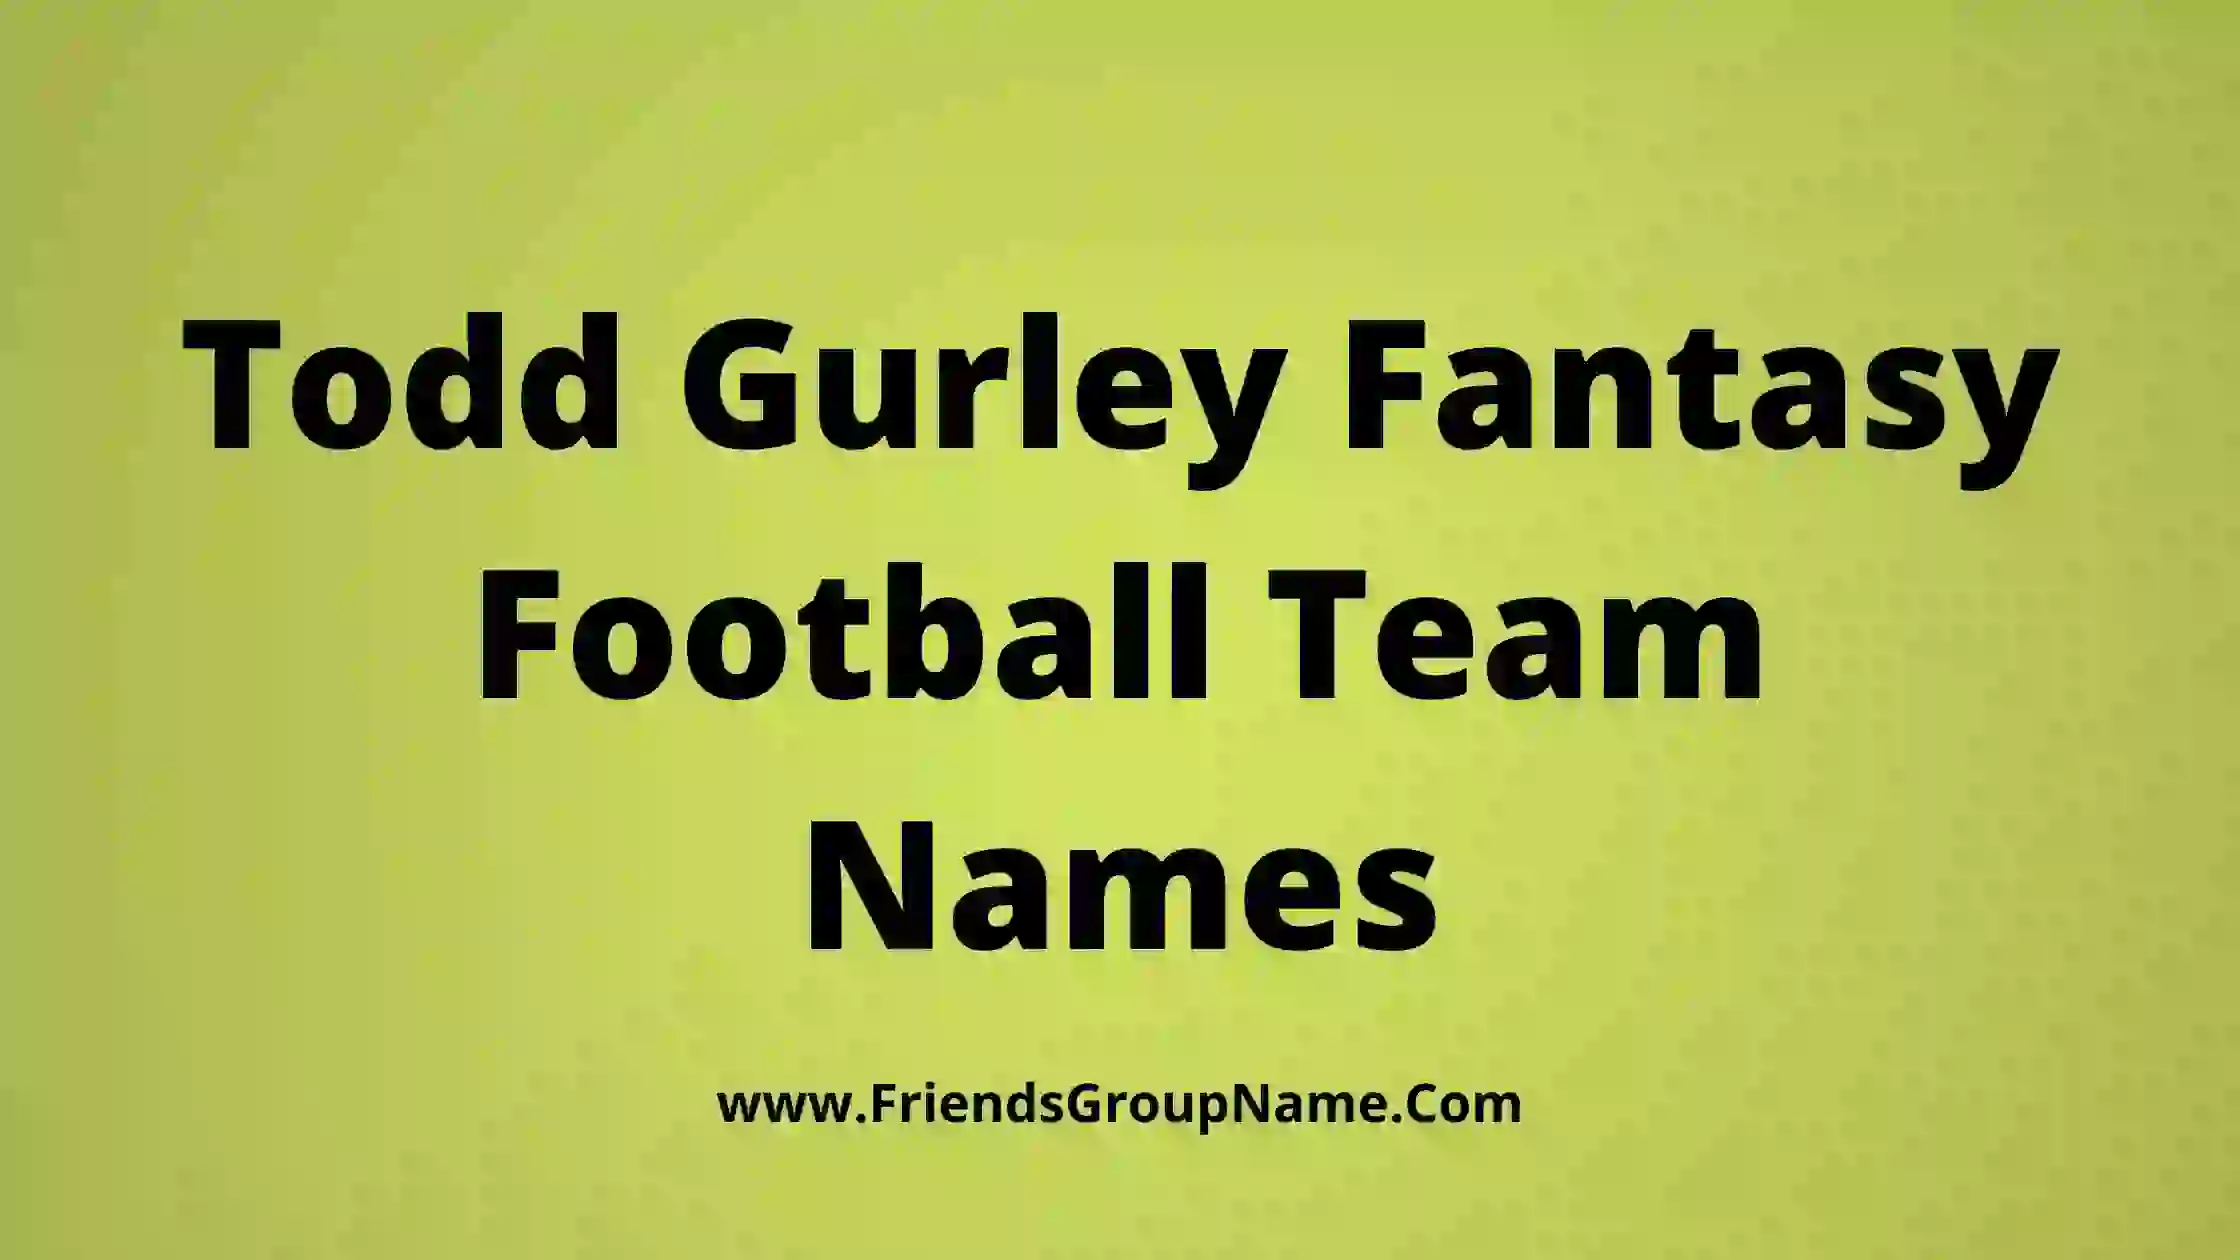 Todd Gurley Fantasy Football Team Names